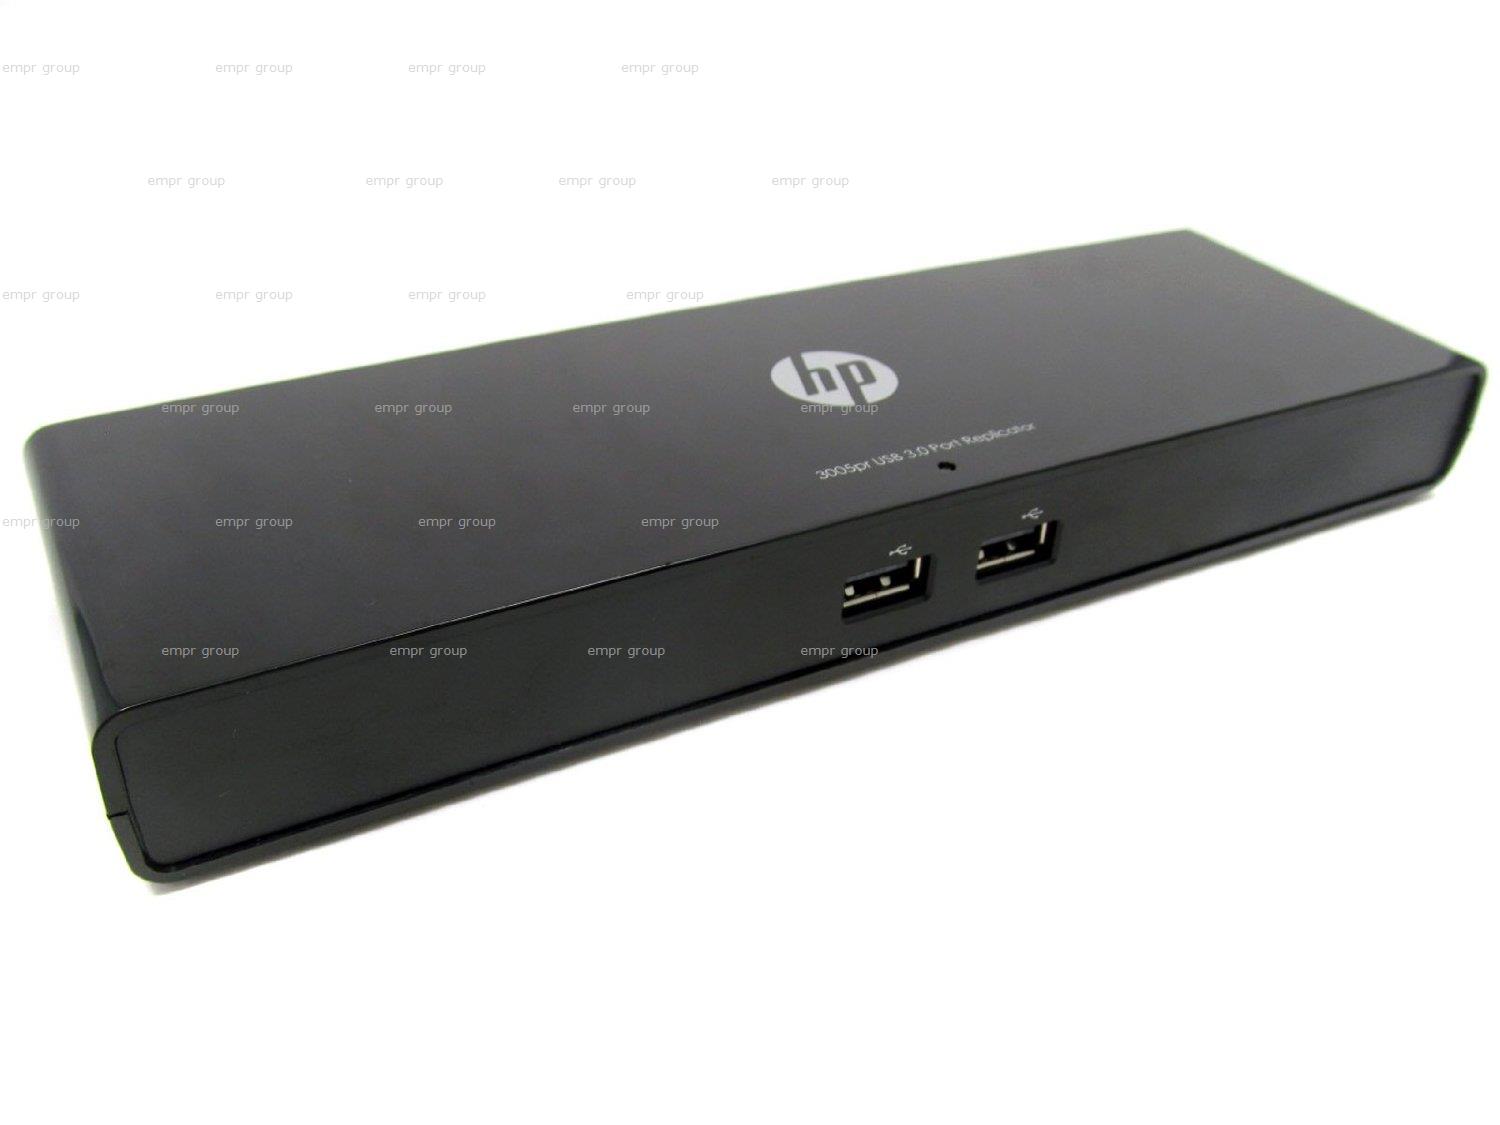 HP EliteBook 820 G1 Laptop (J7Q09US) Port Replicator 690650-001